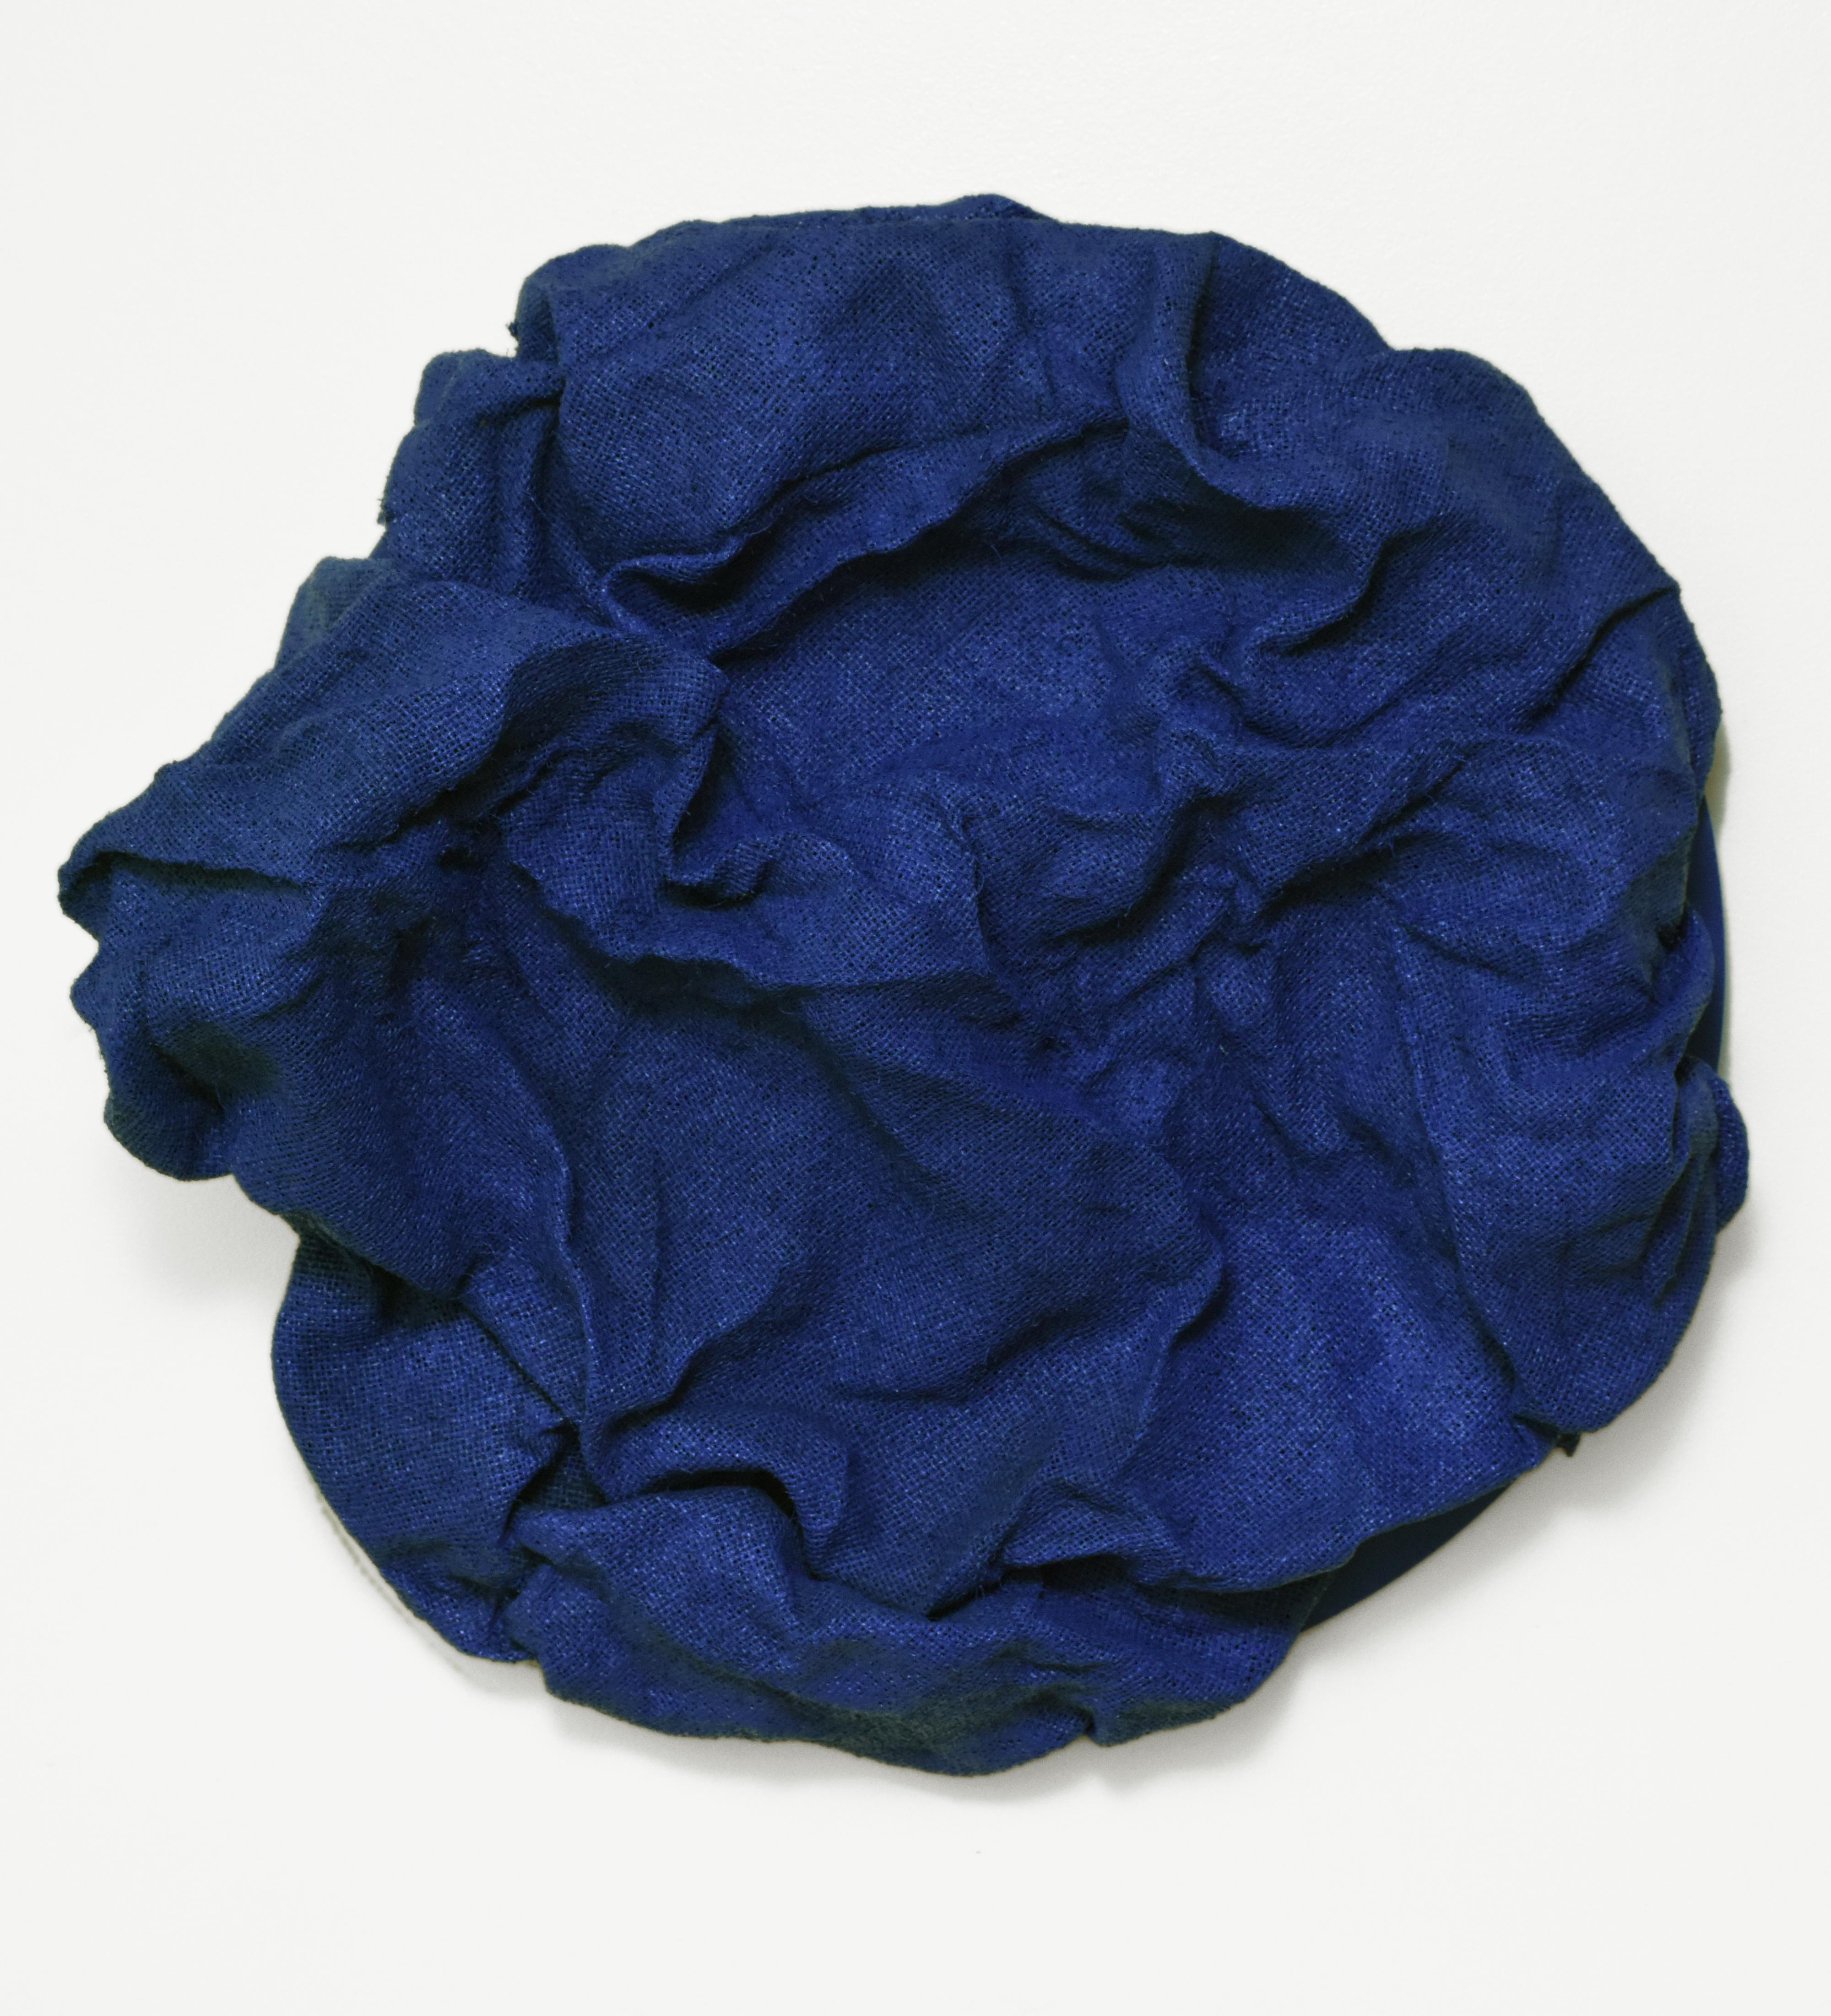 Iris Blue Folds (navy blue, dark blue, hard fabric, contemporary design, textile